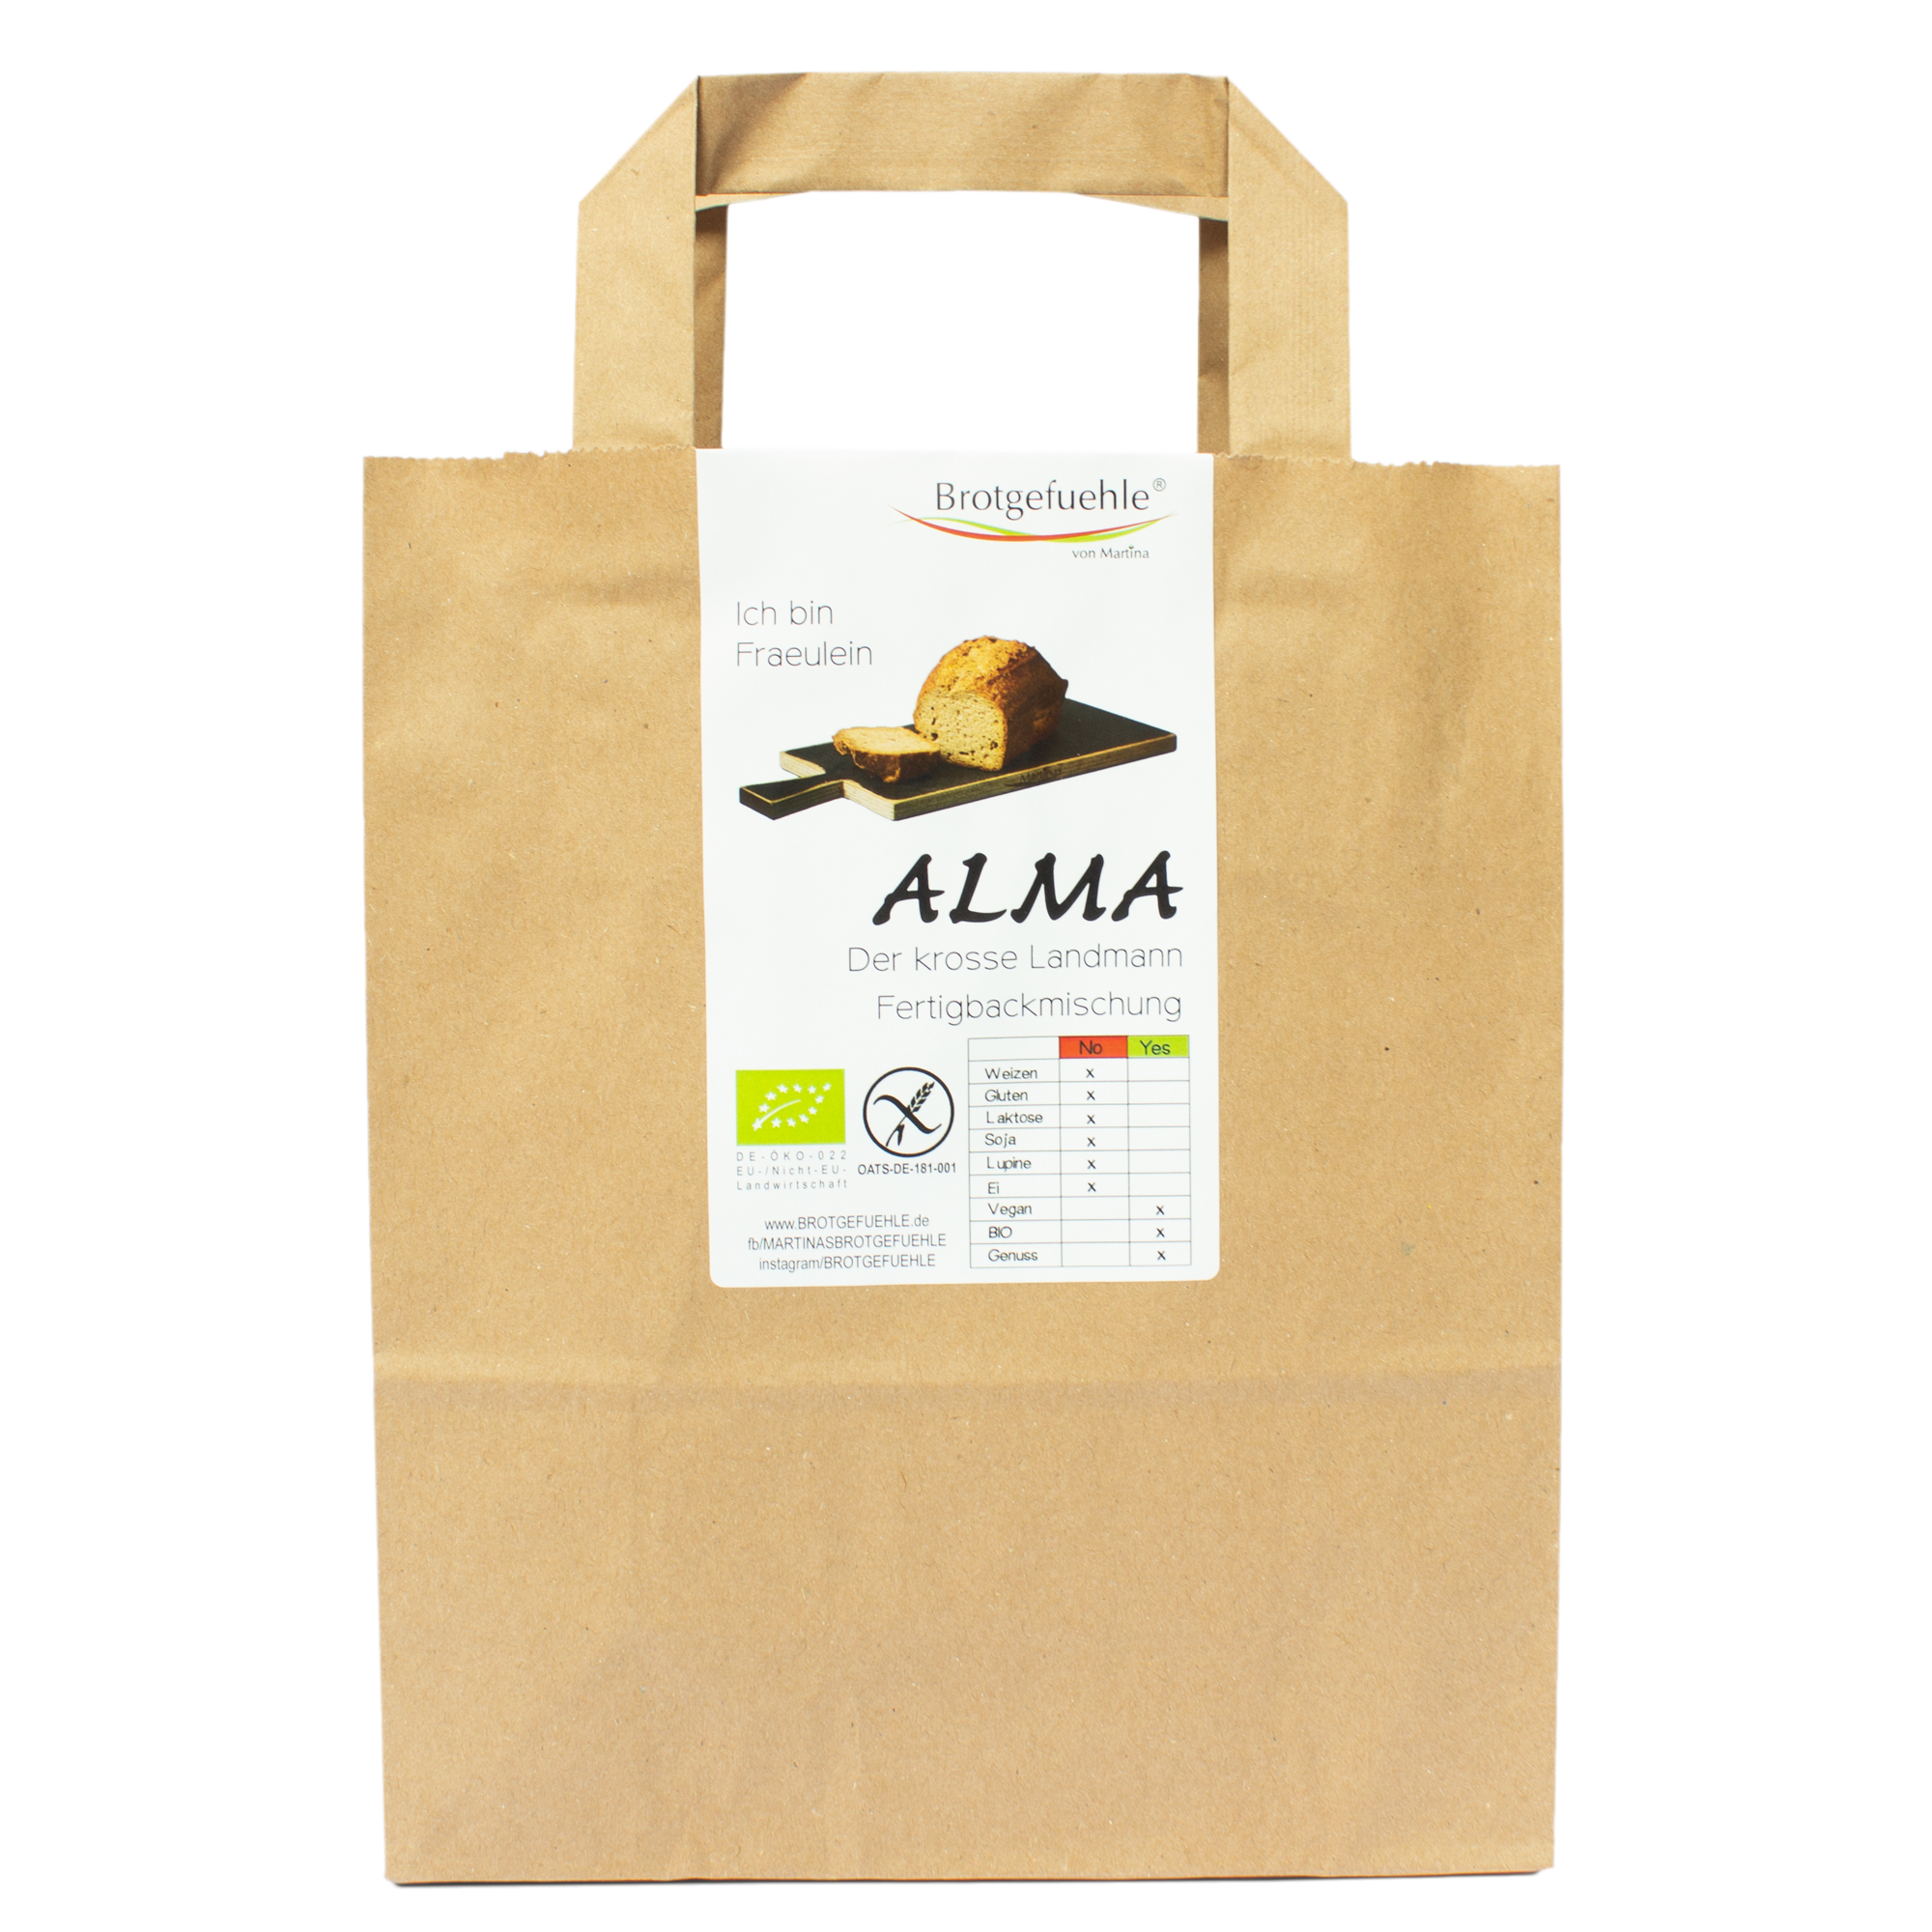 Miss ALMA - ready-to-bake mixture - gluten-free